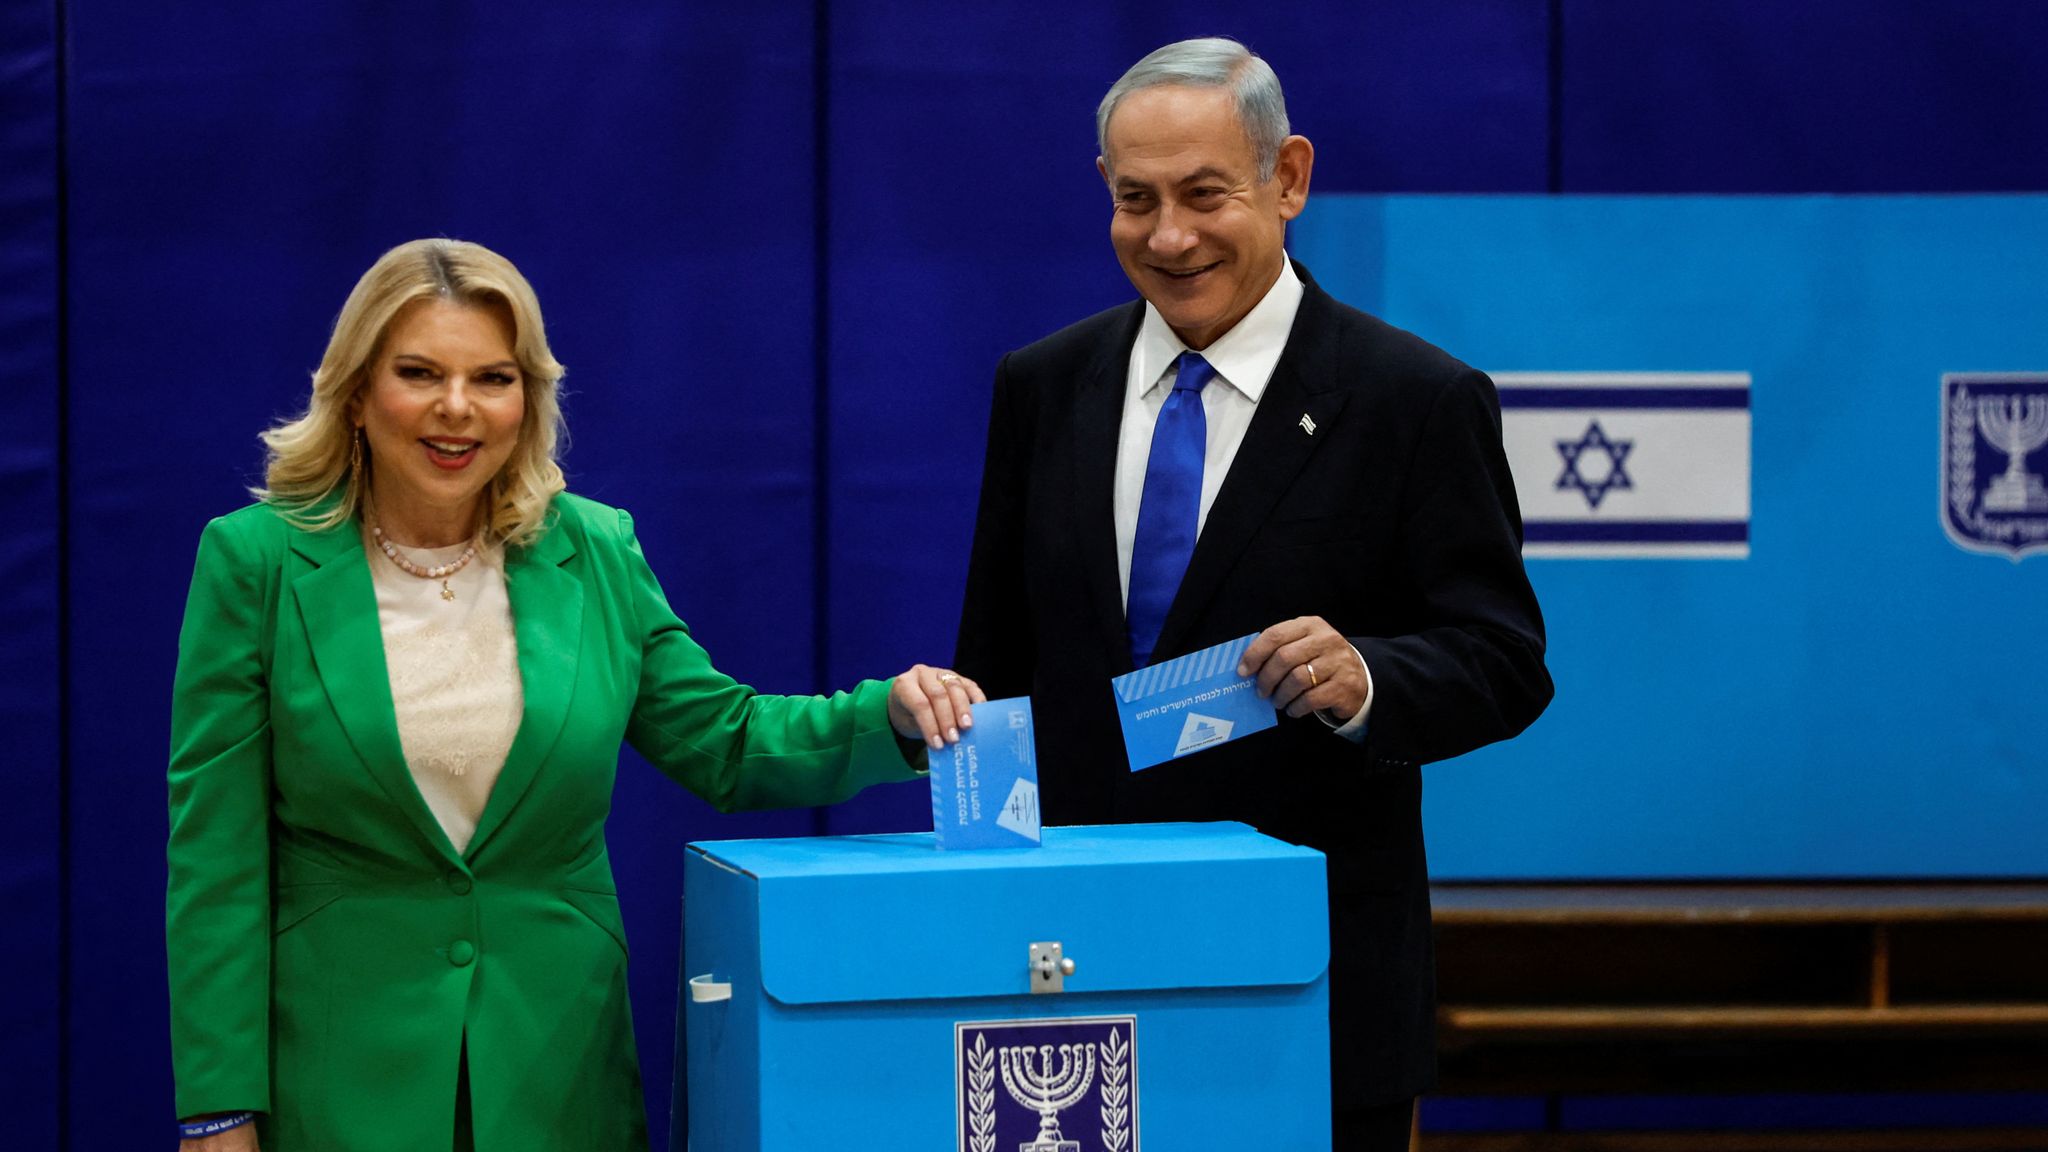 Benjamin Netanyahu and allies seen winning narrow majority in Israeli  election - exit polls | World News | Sky News